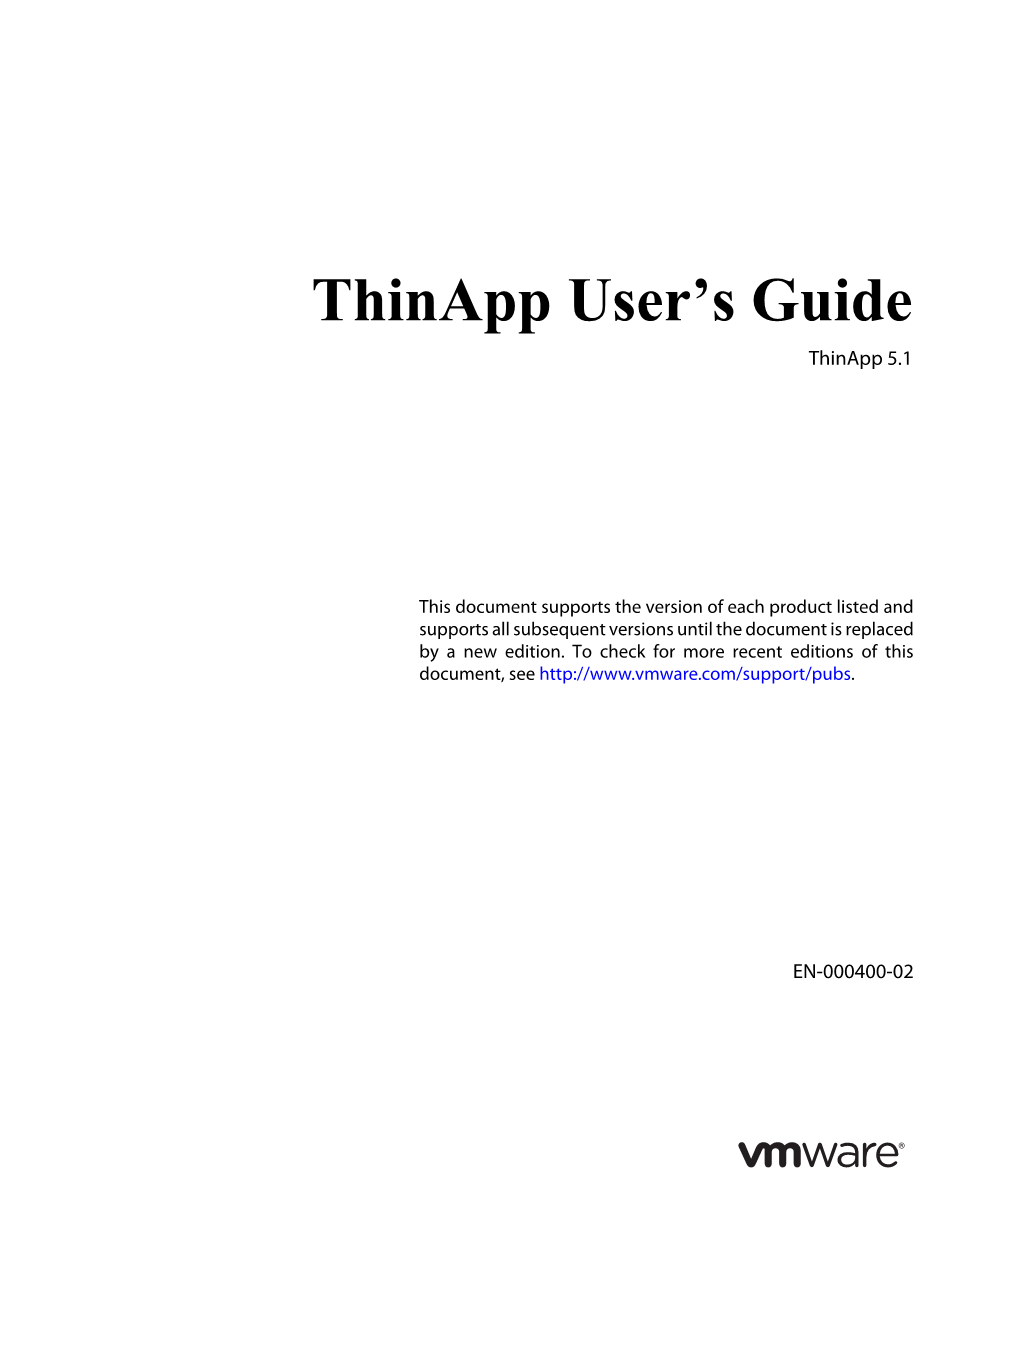 Vmware Thinapp User's Guide